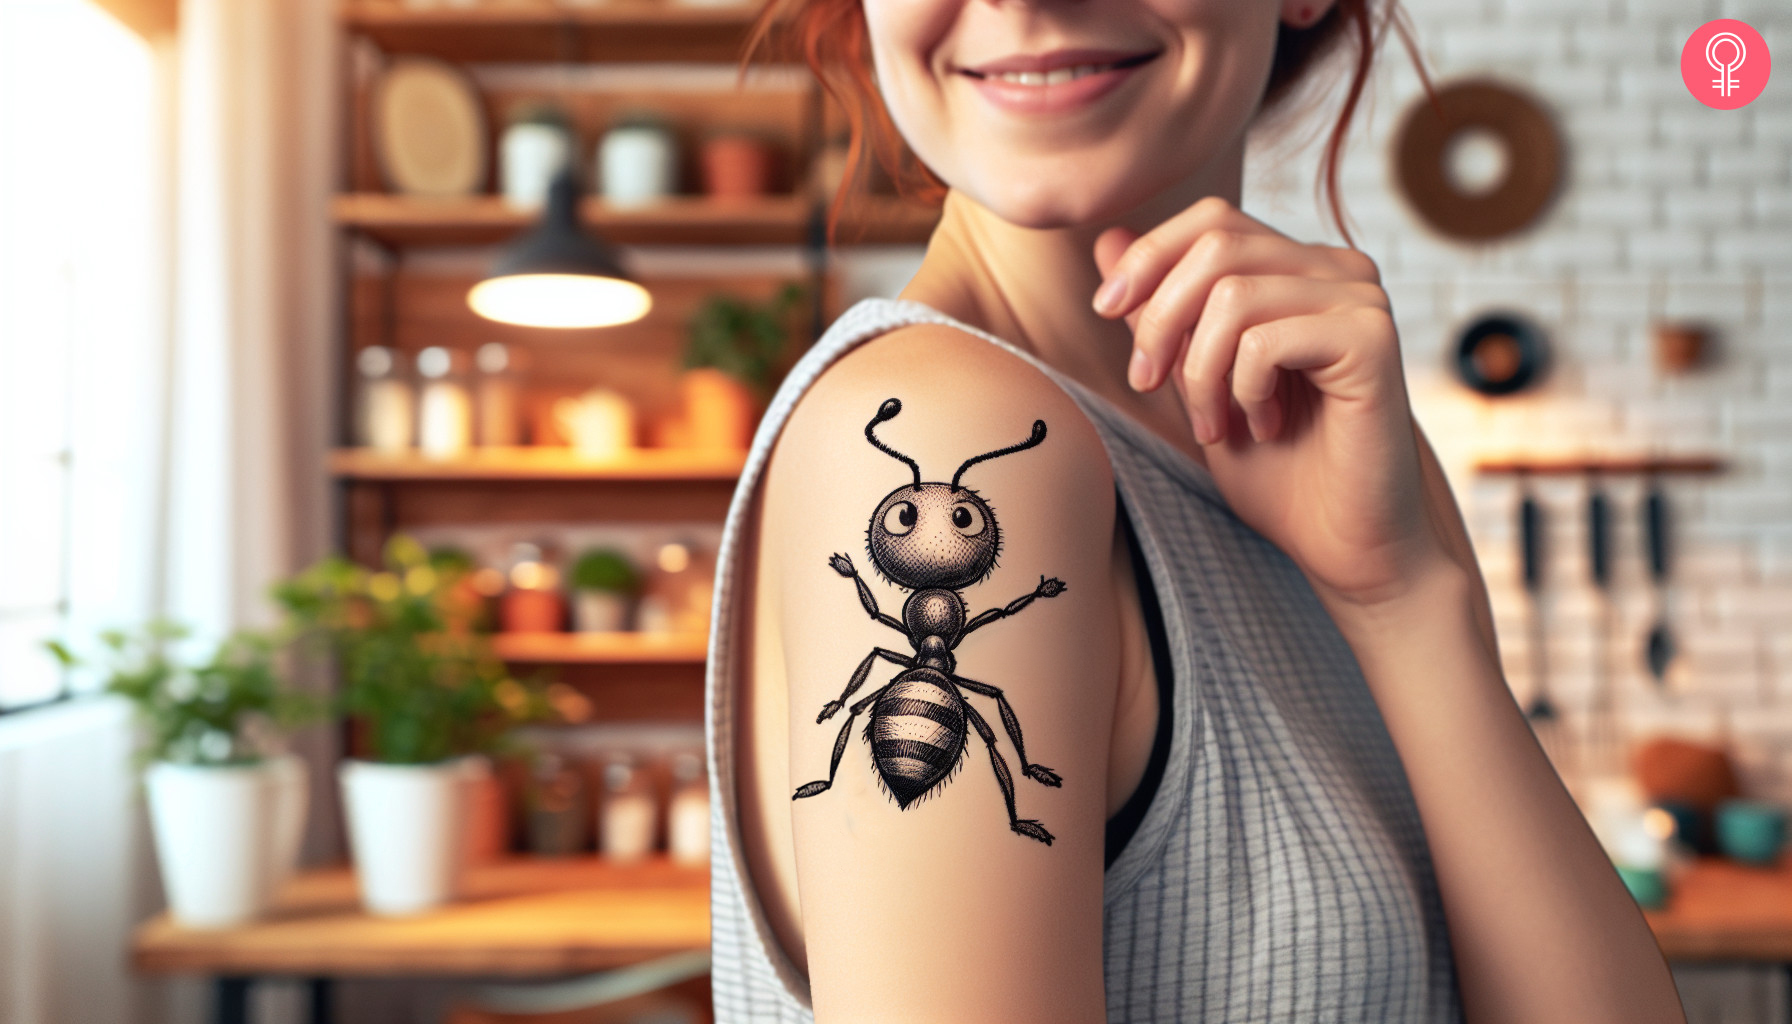 Cartoon ant tattoo on the upper arm